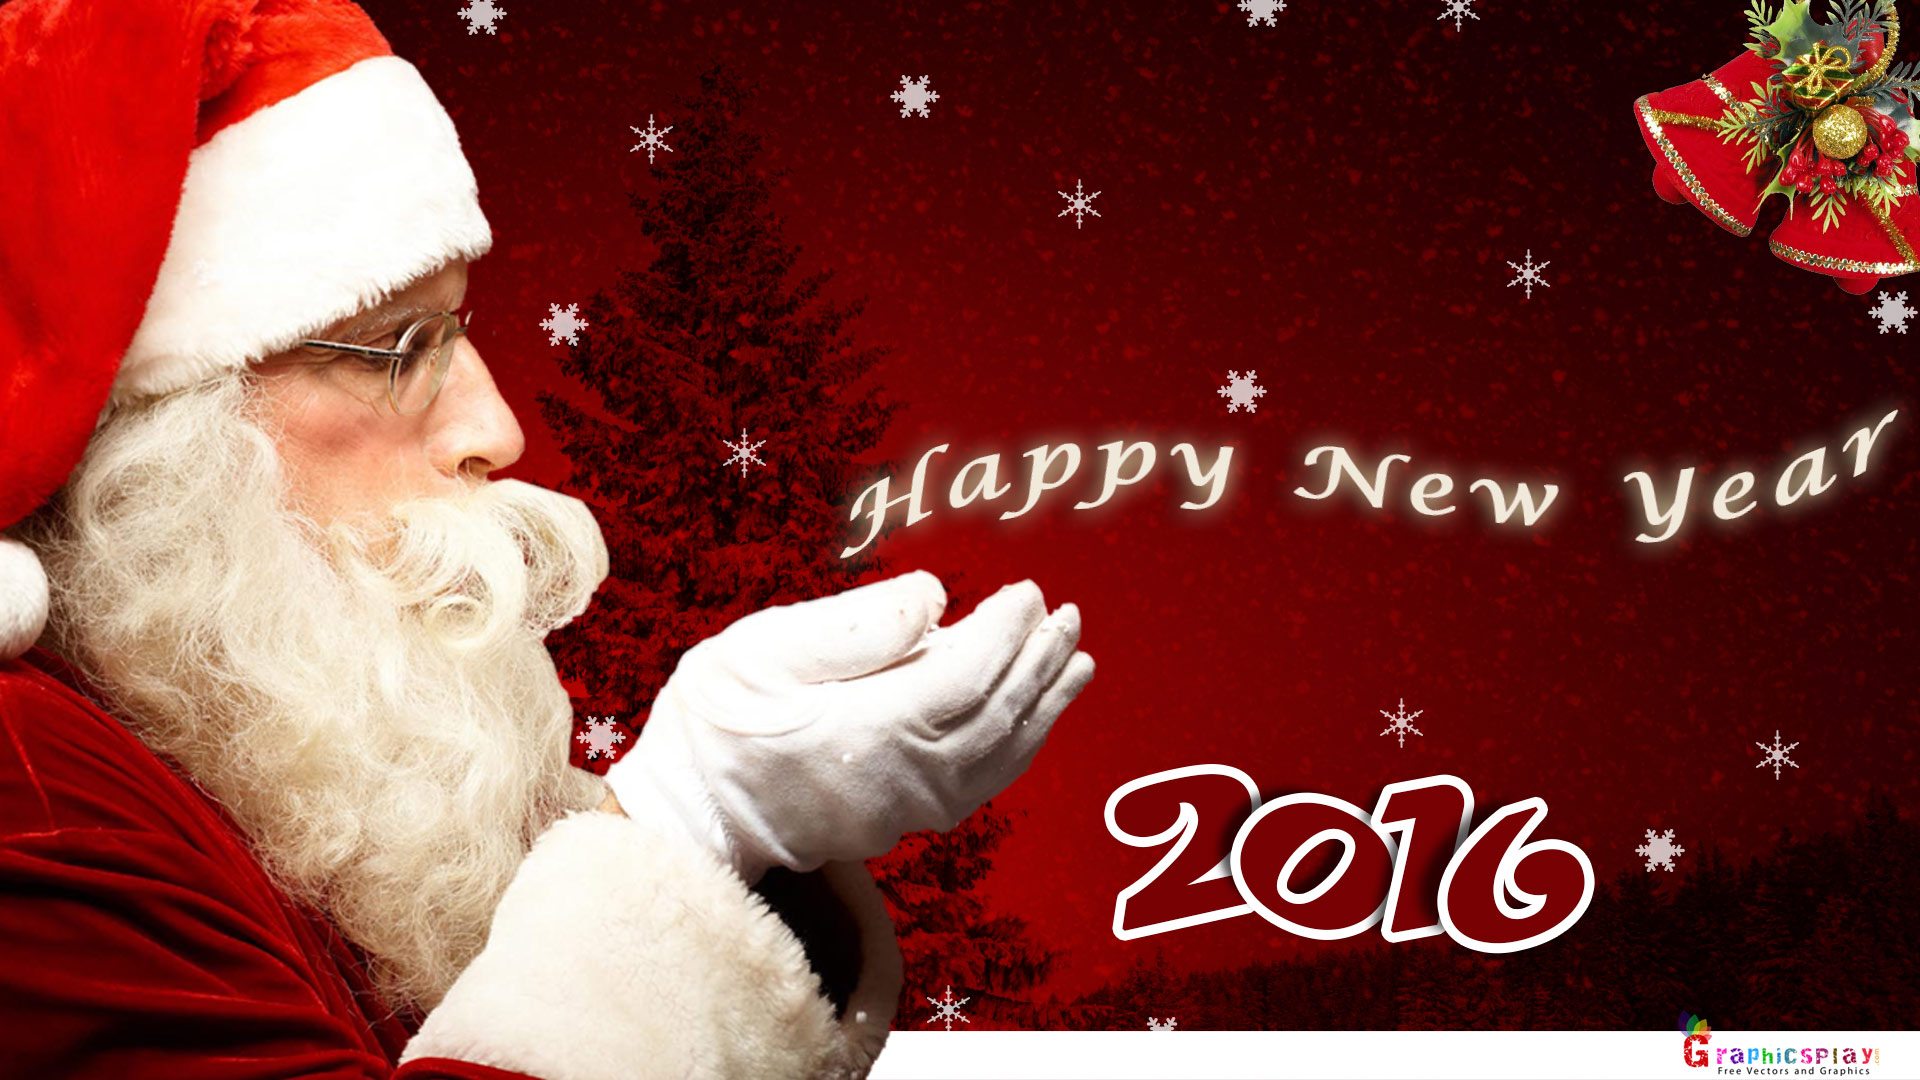 New Year Greeting with Santa JPG and PSD 2